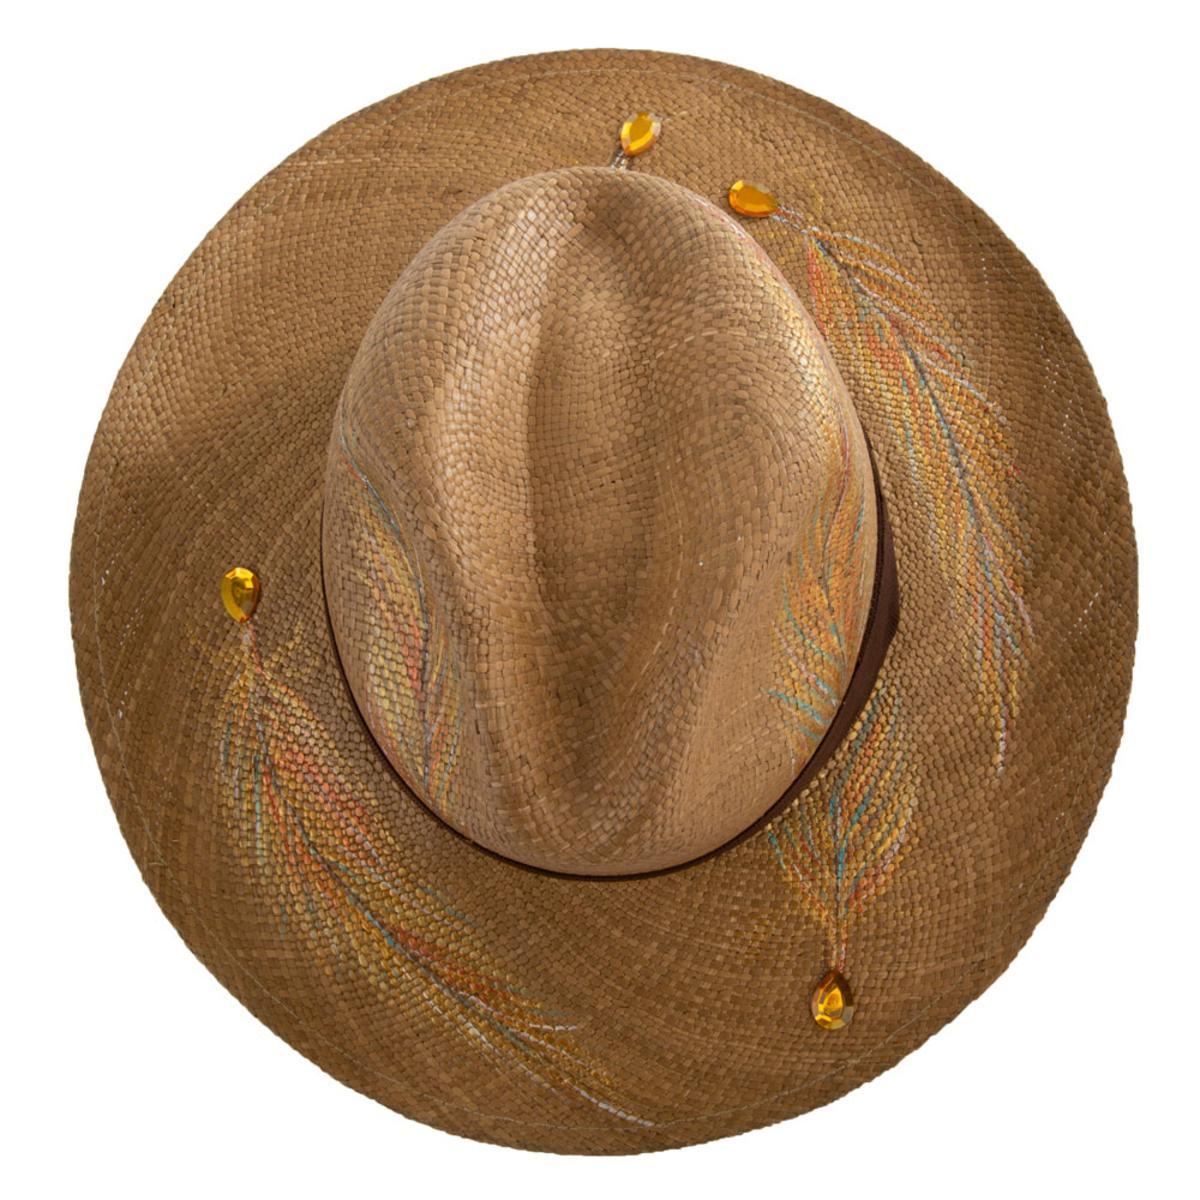 Plumas CafÃ© Panama Hat Size M